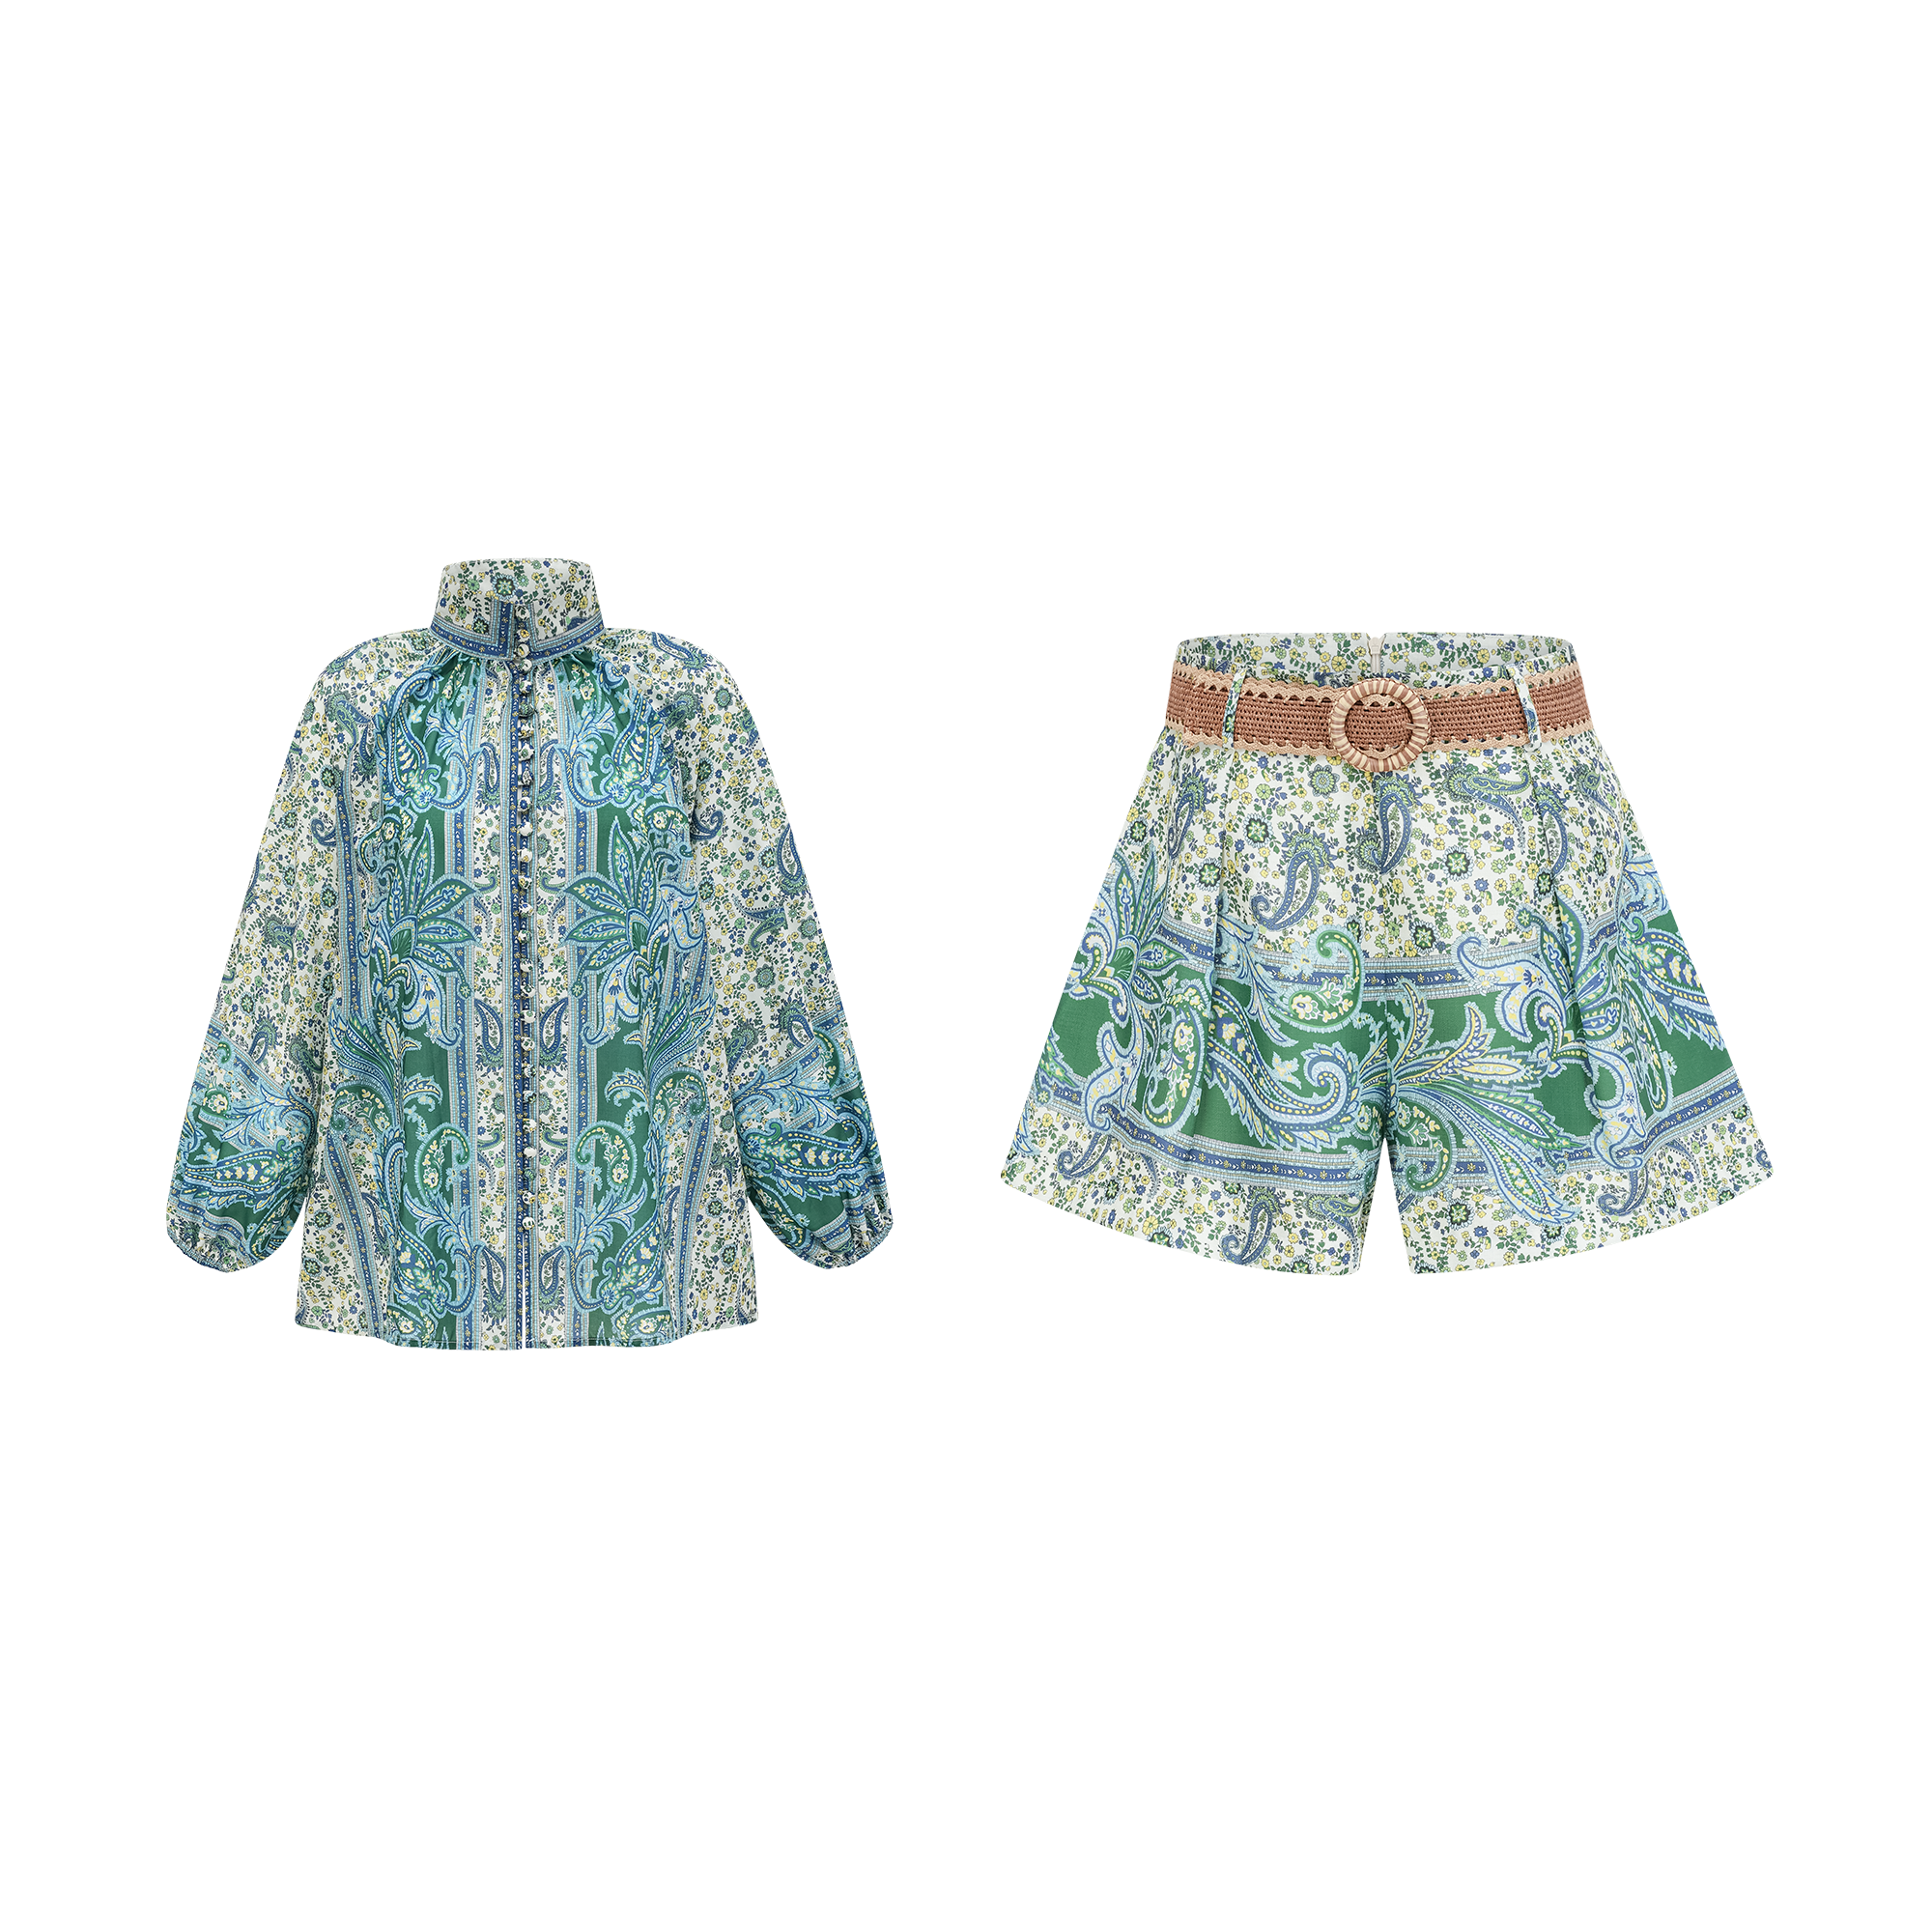 Louise green paisley shirt & shorts matching set